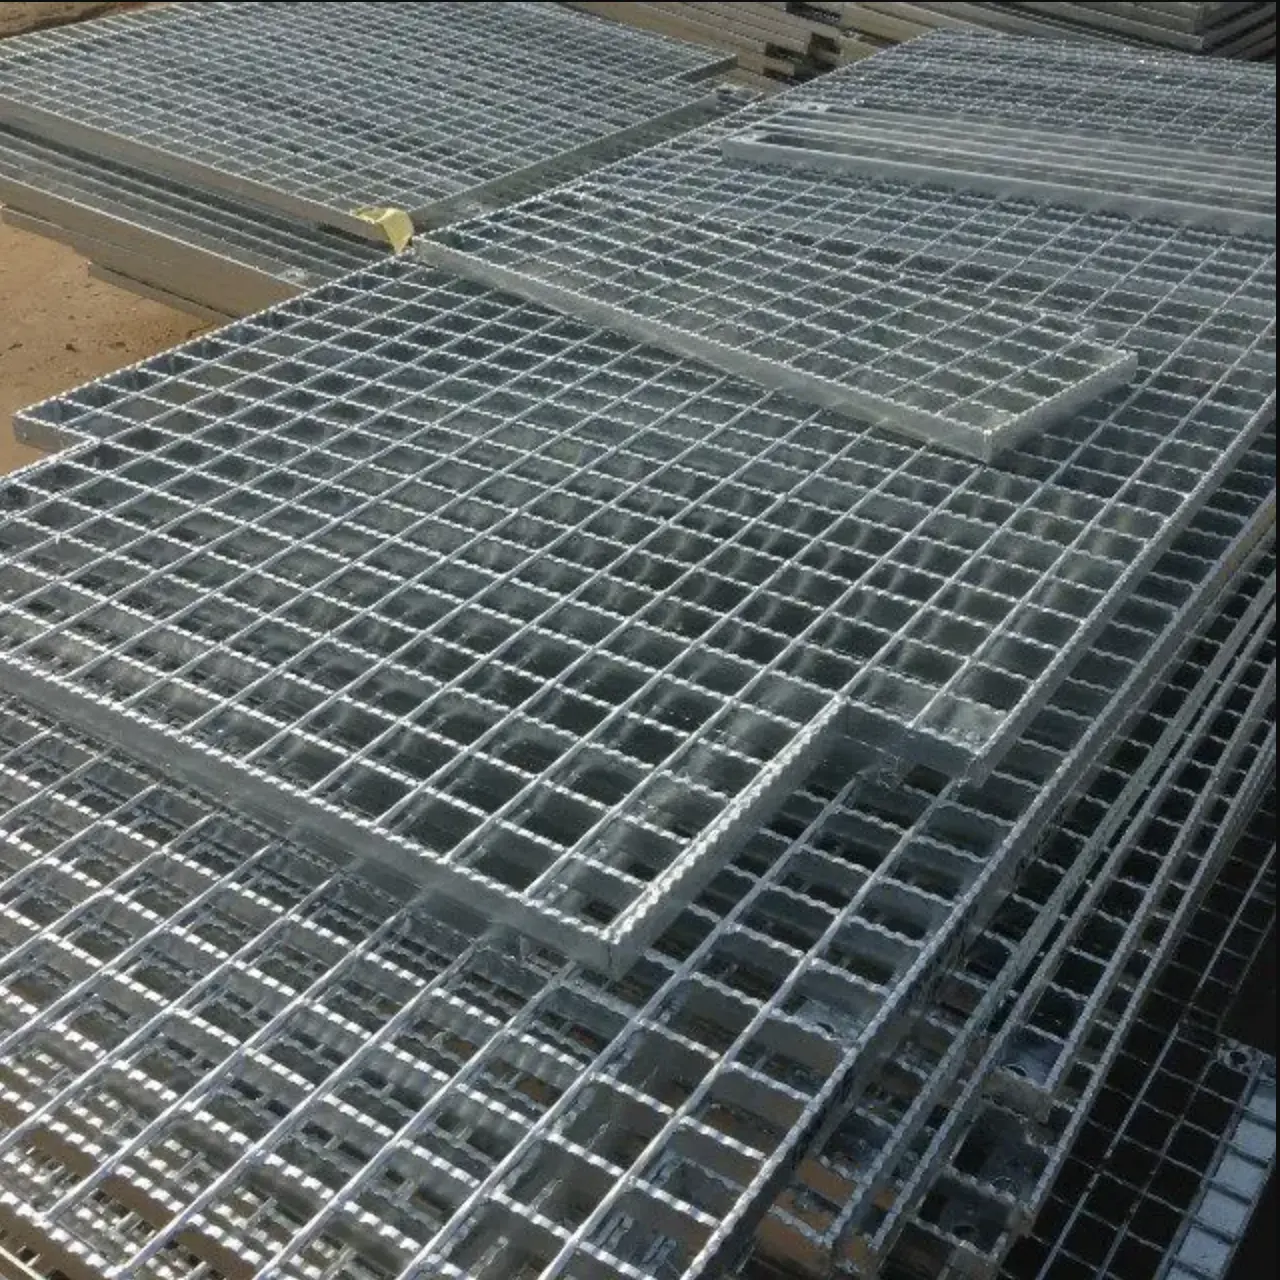 Galvanized steel grating platform, metal flooring walkway, hdg bar mesh grates